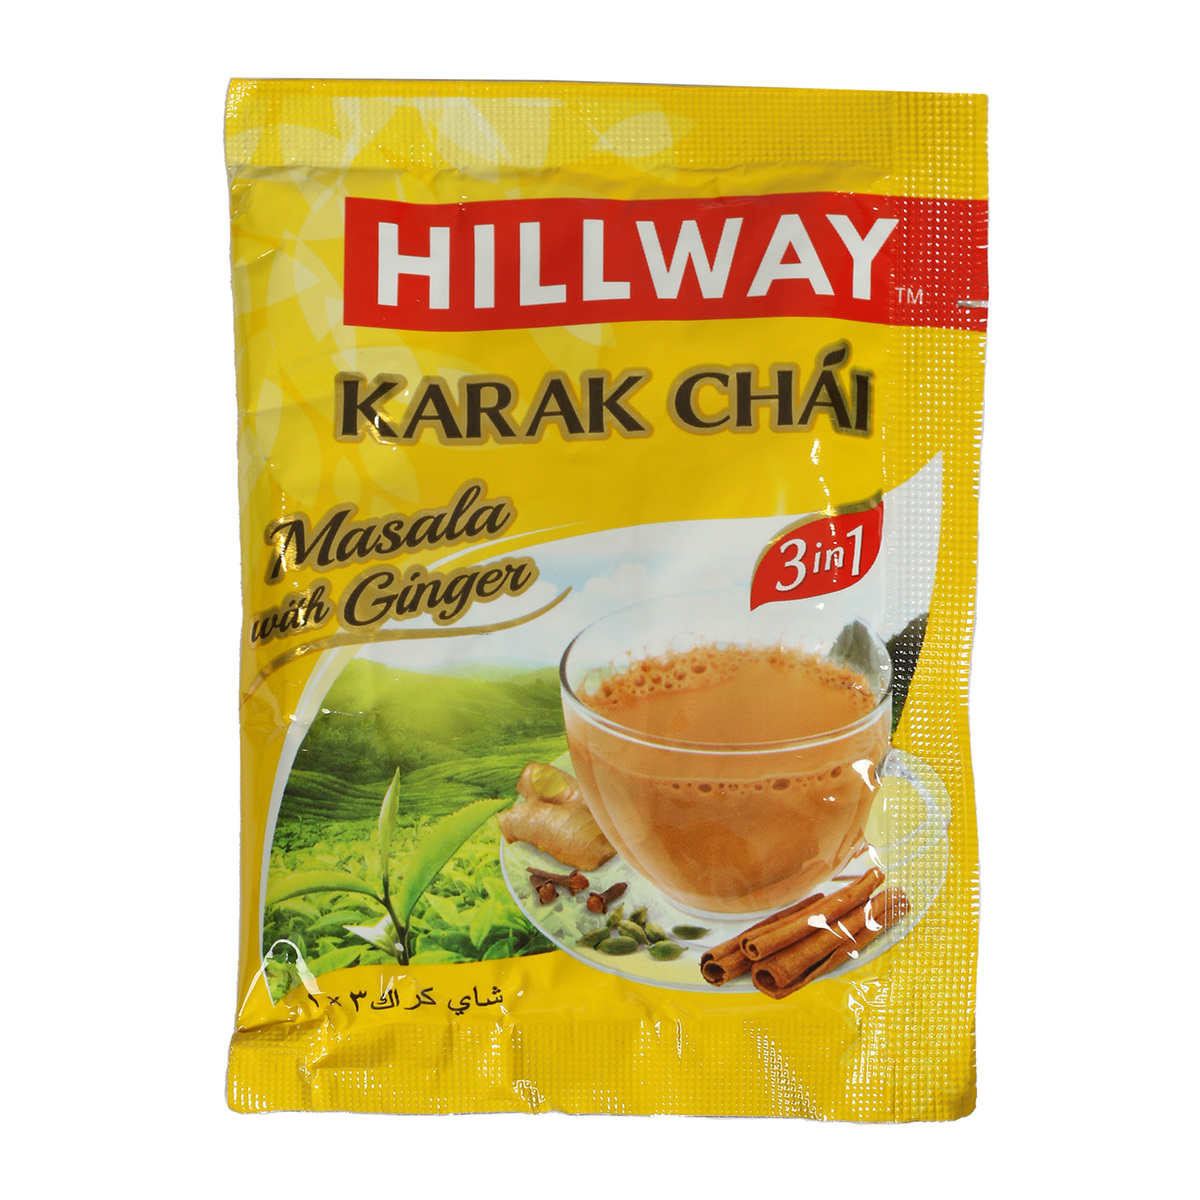 Hillway Masala With Ginger 3 In 1 Karak Chai 20 x 18 g